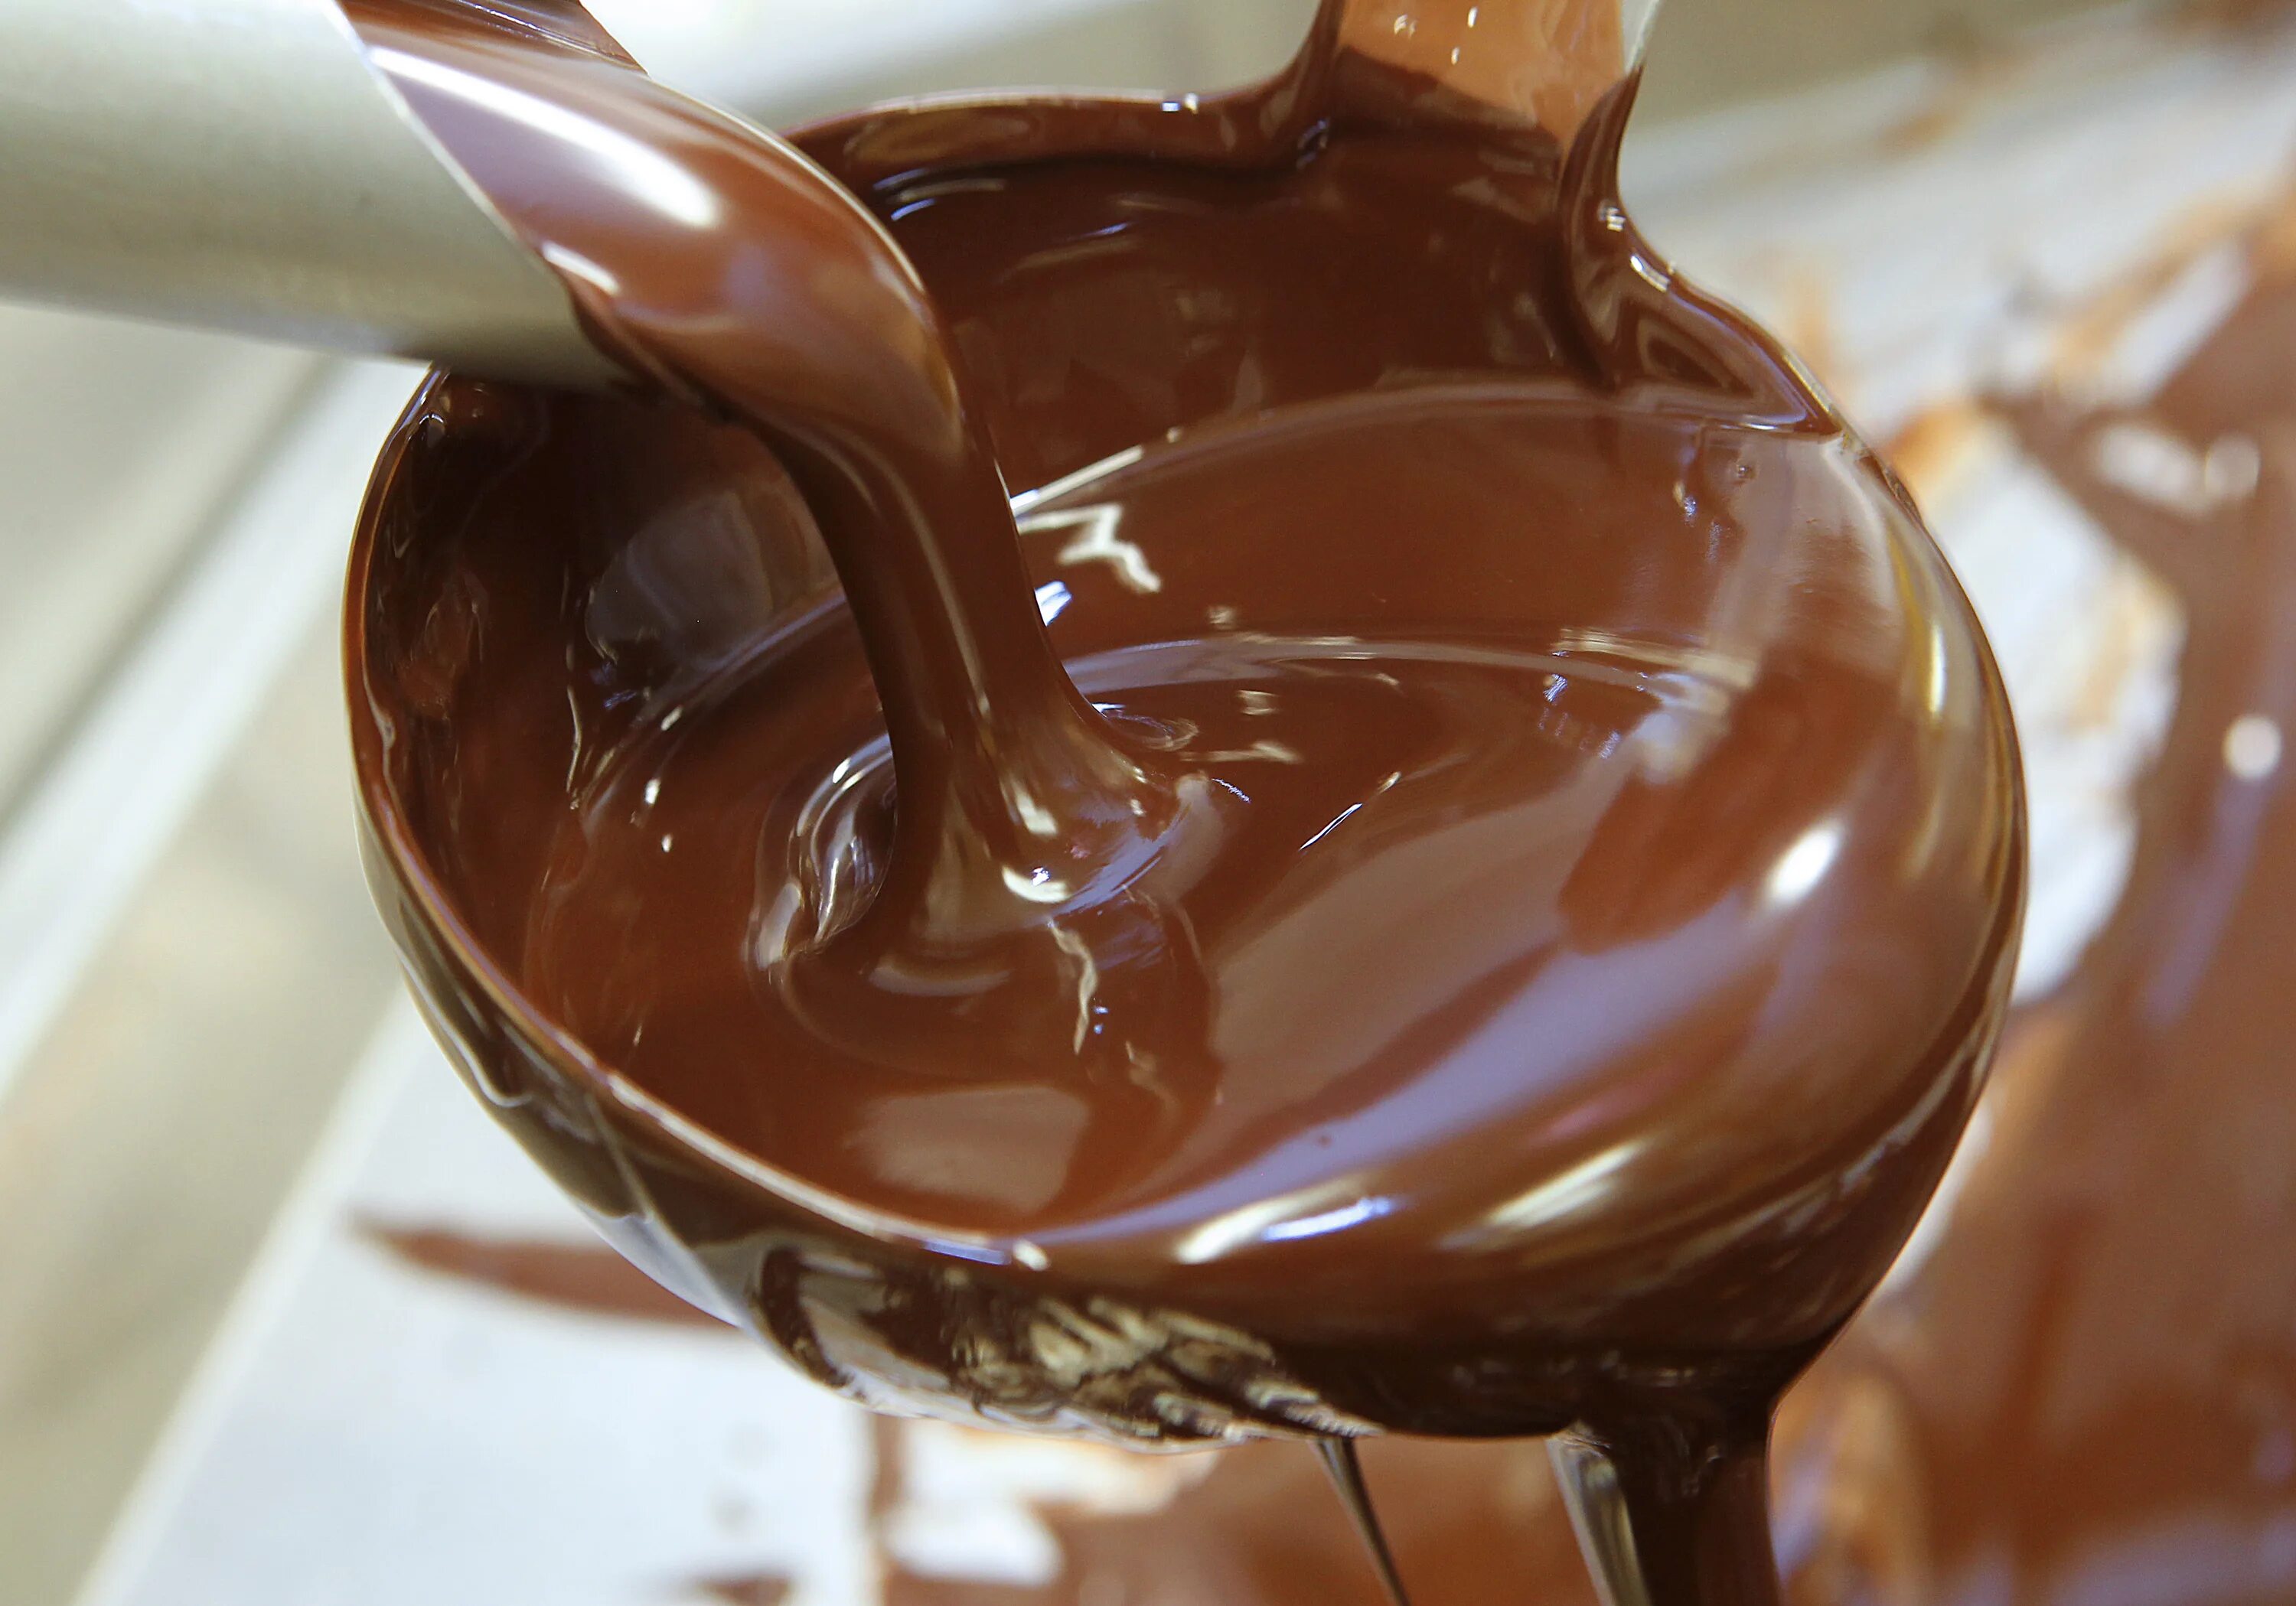 Шоколад масса. Жидкий шоколад. Растопленный шоколад. Расплавленный шоколад. Приготовление шоколада.